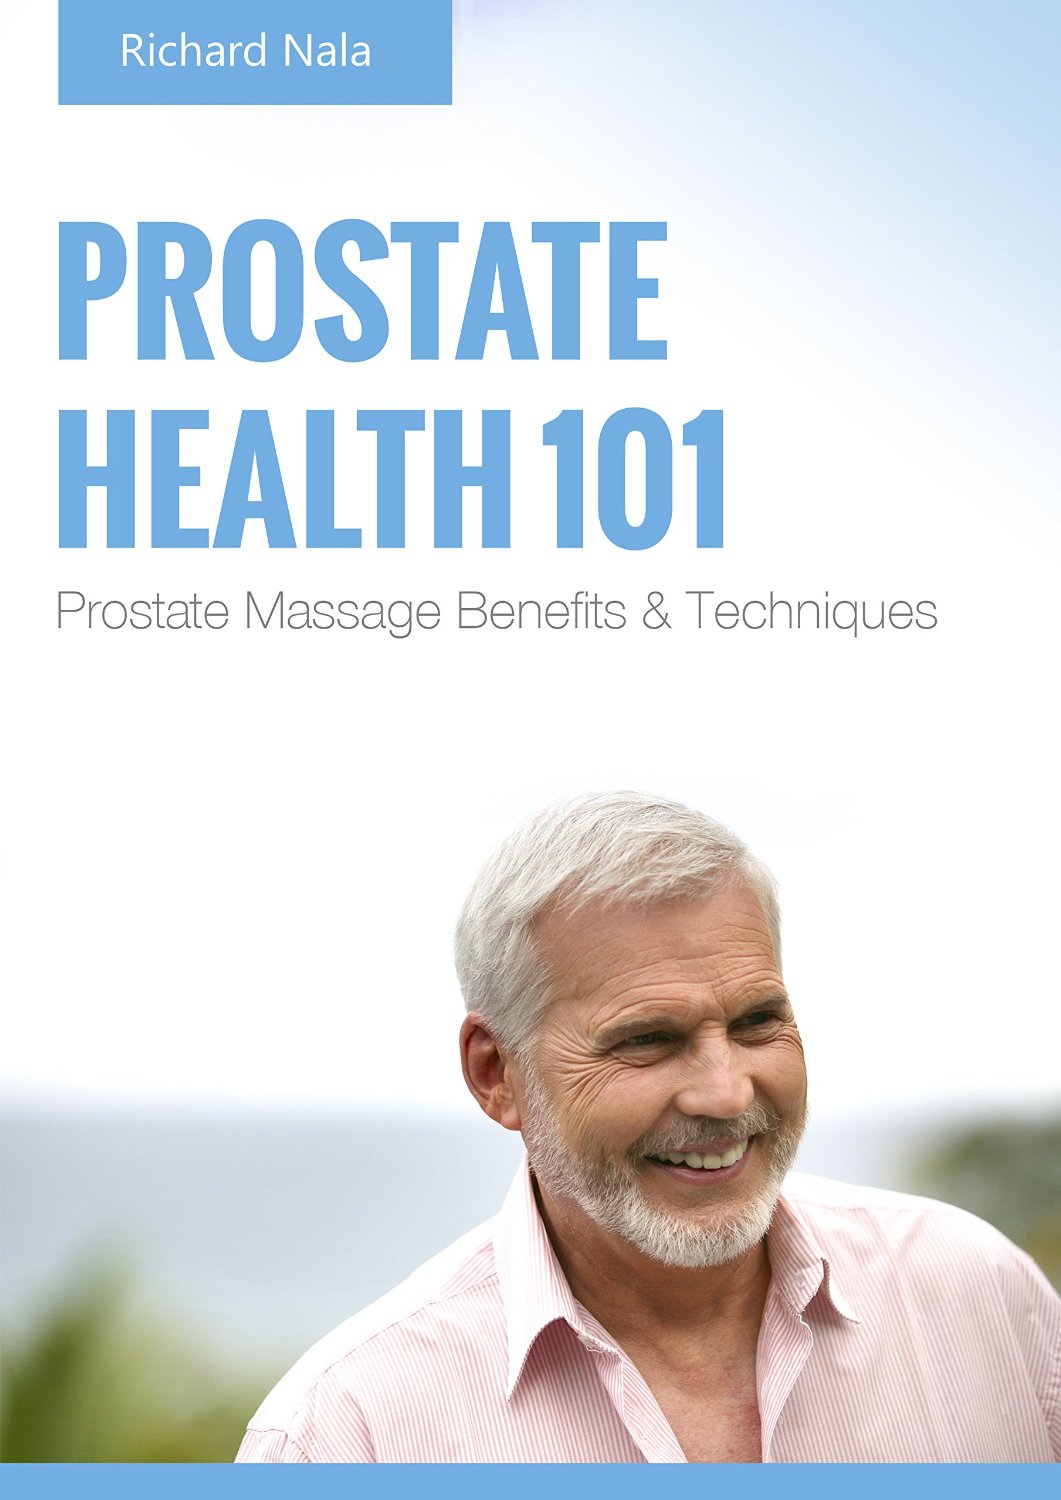 Prostate Health 101 by Richard Nala